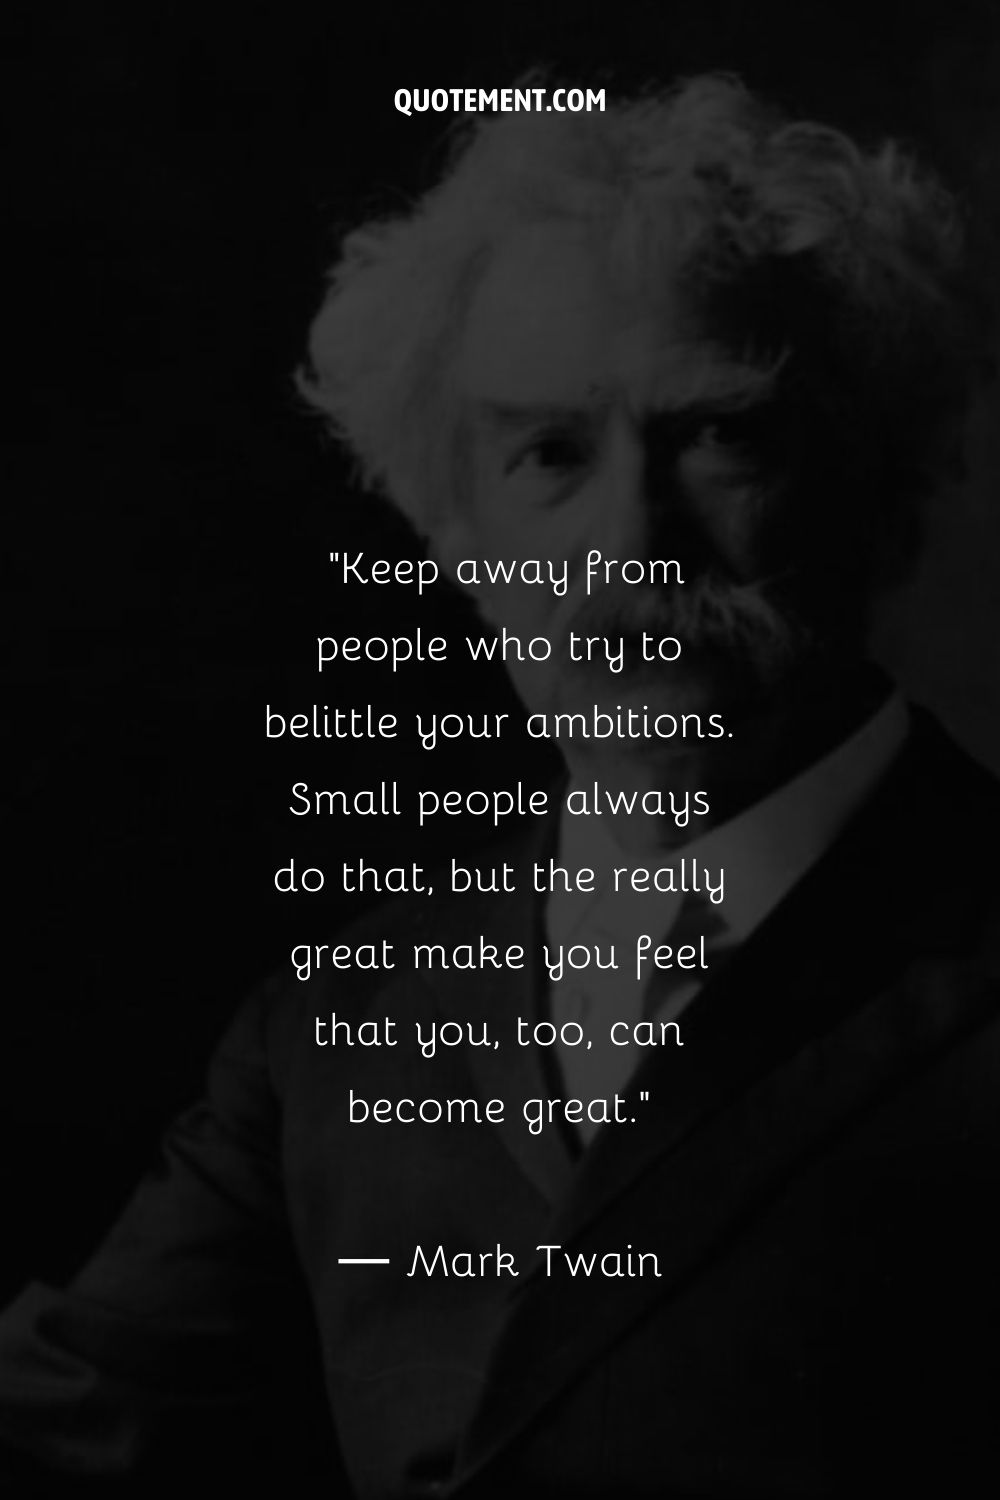 Portrait of Mark Twain representing an inspirational Mark Twain quote
